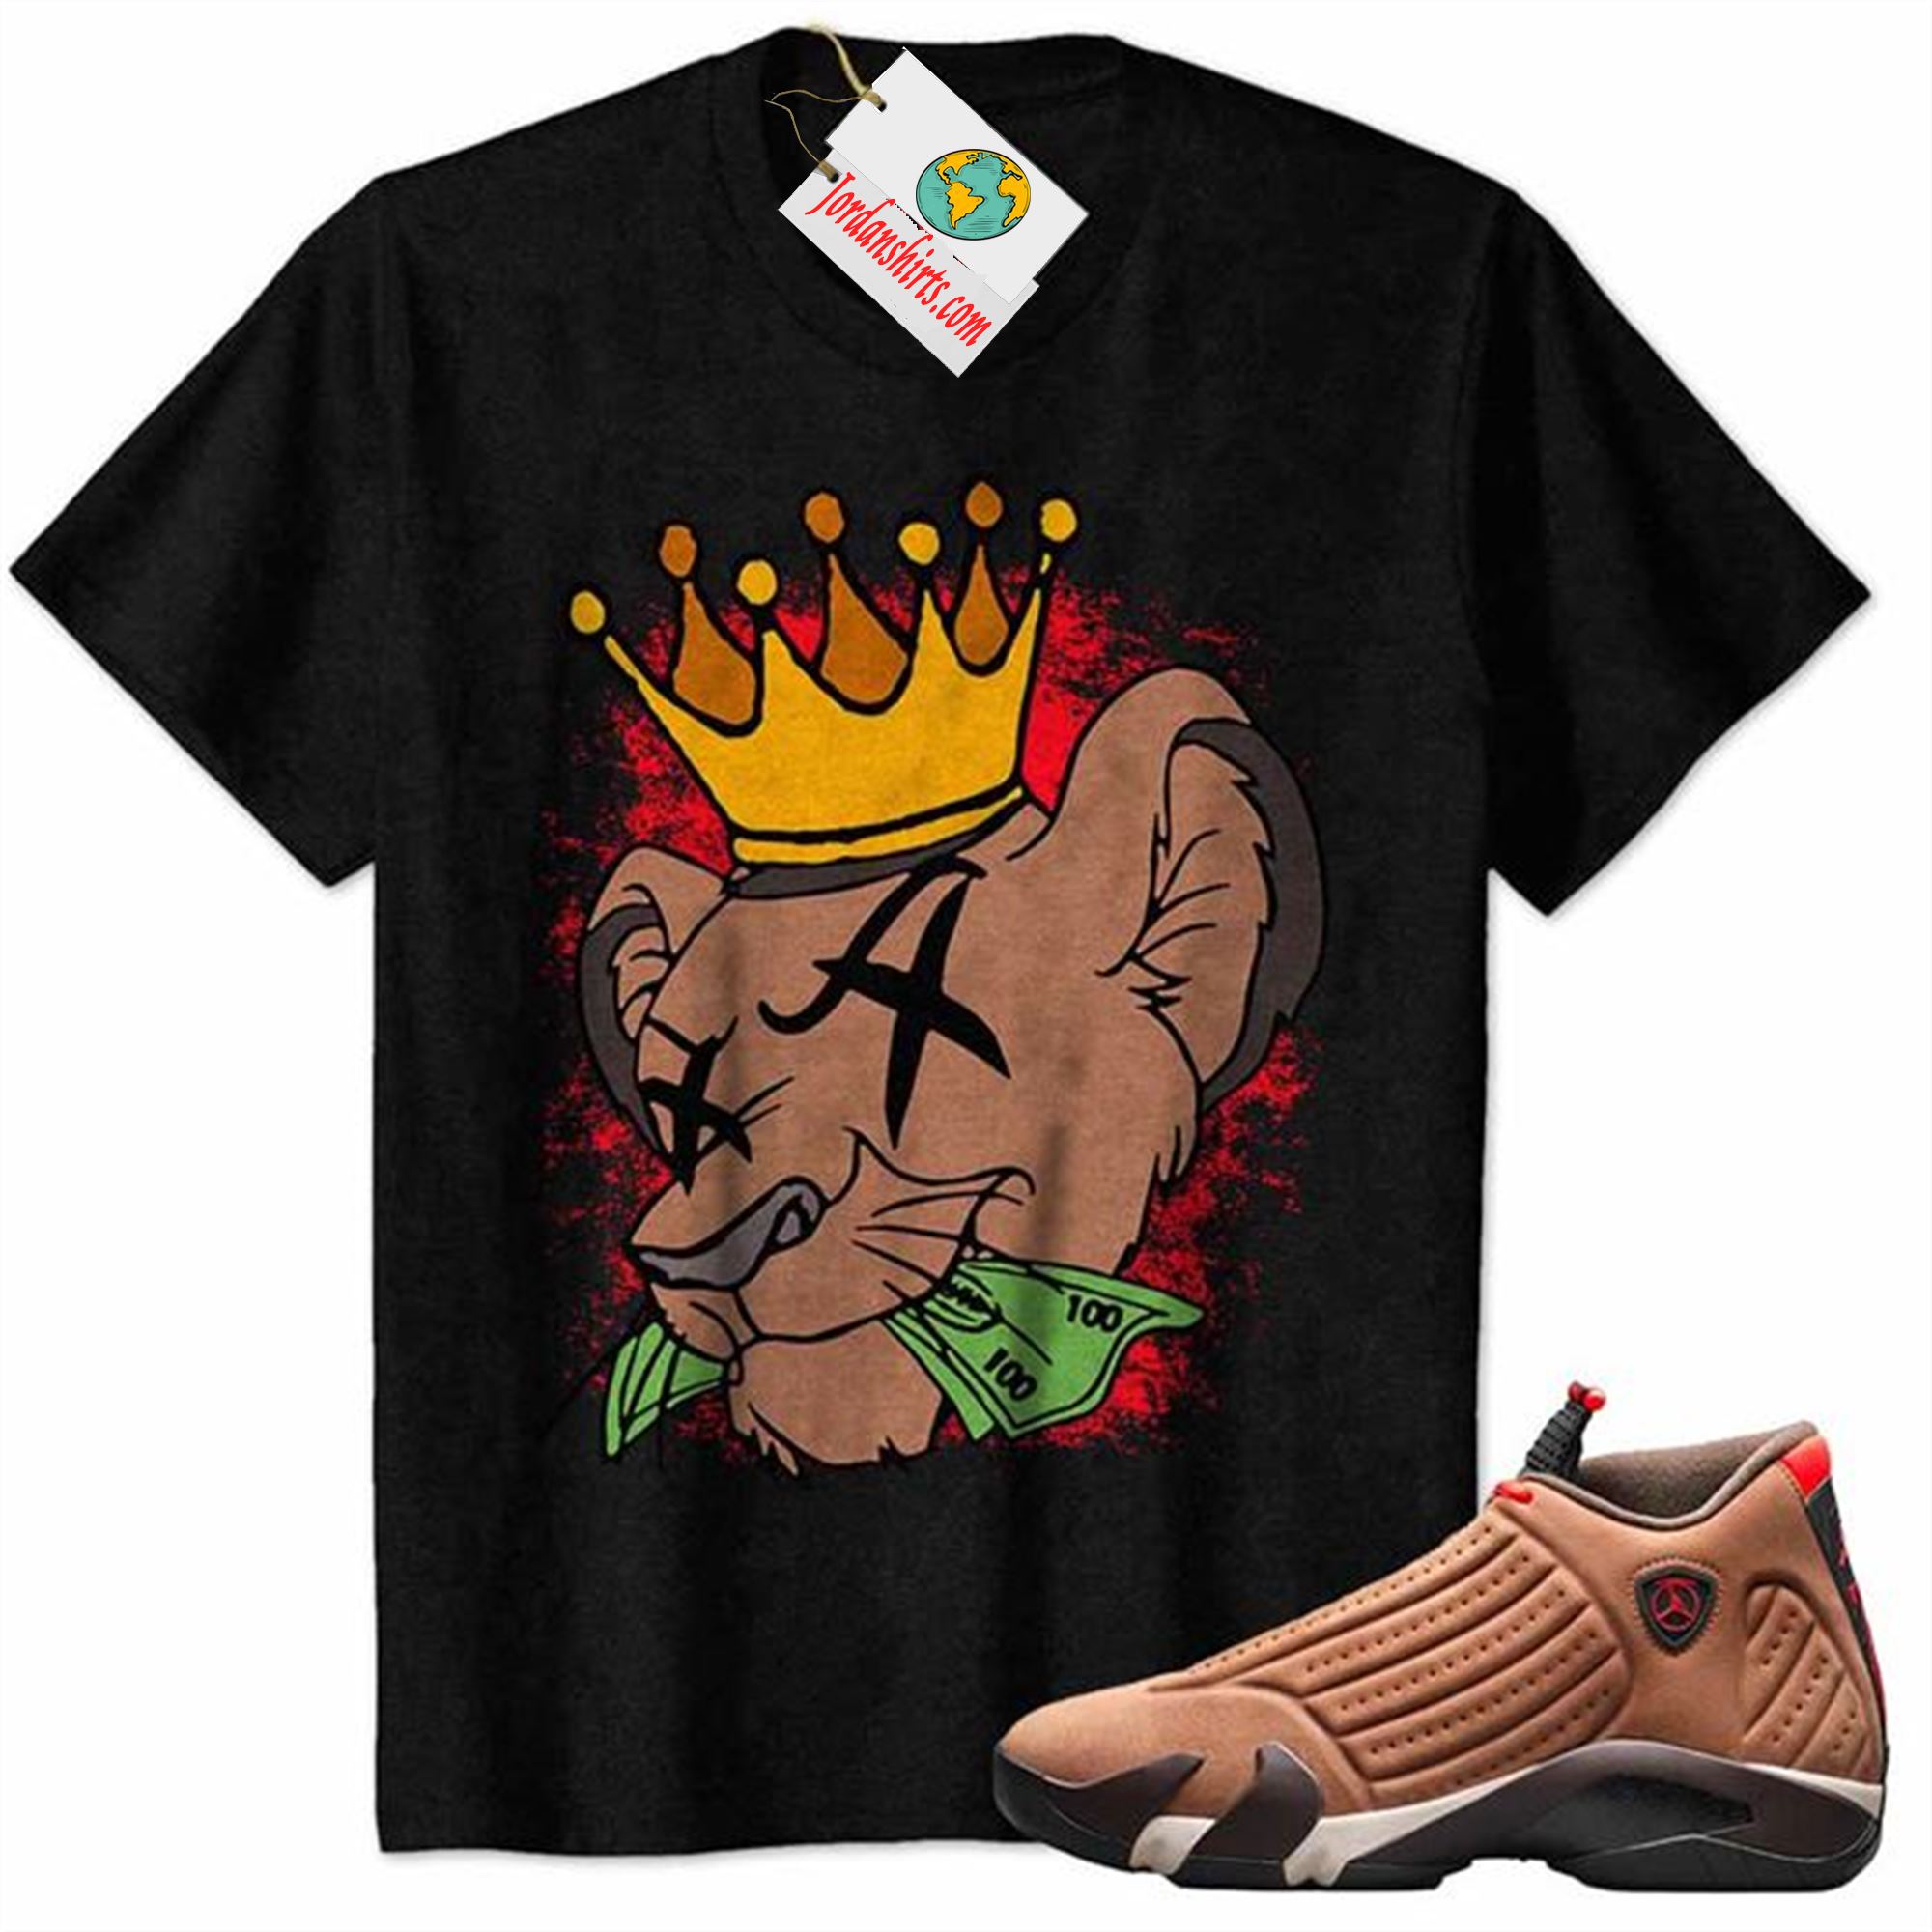 Jordan 14 Shirt, Simba Lion King With Crown Money Black Air Jordan 14 Winterized 14s Size Up To 5xl